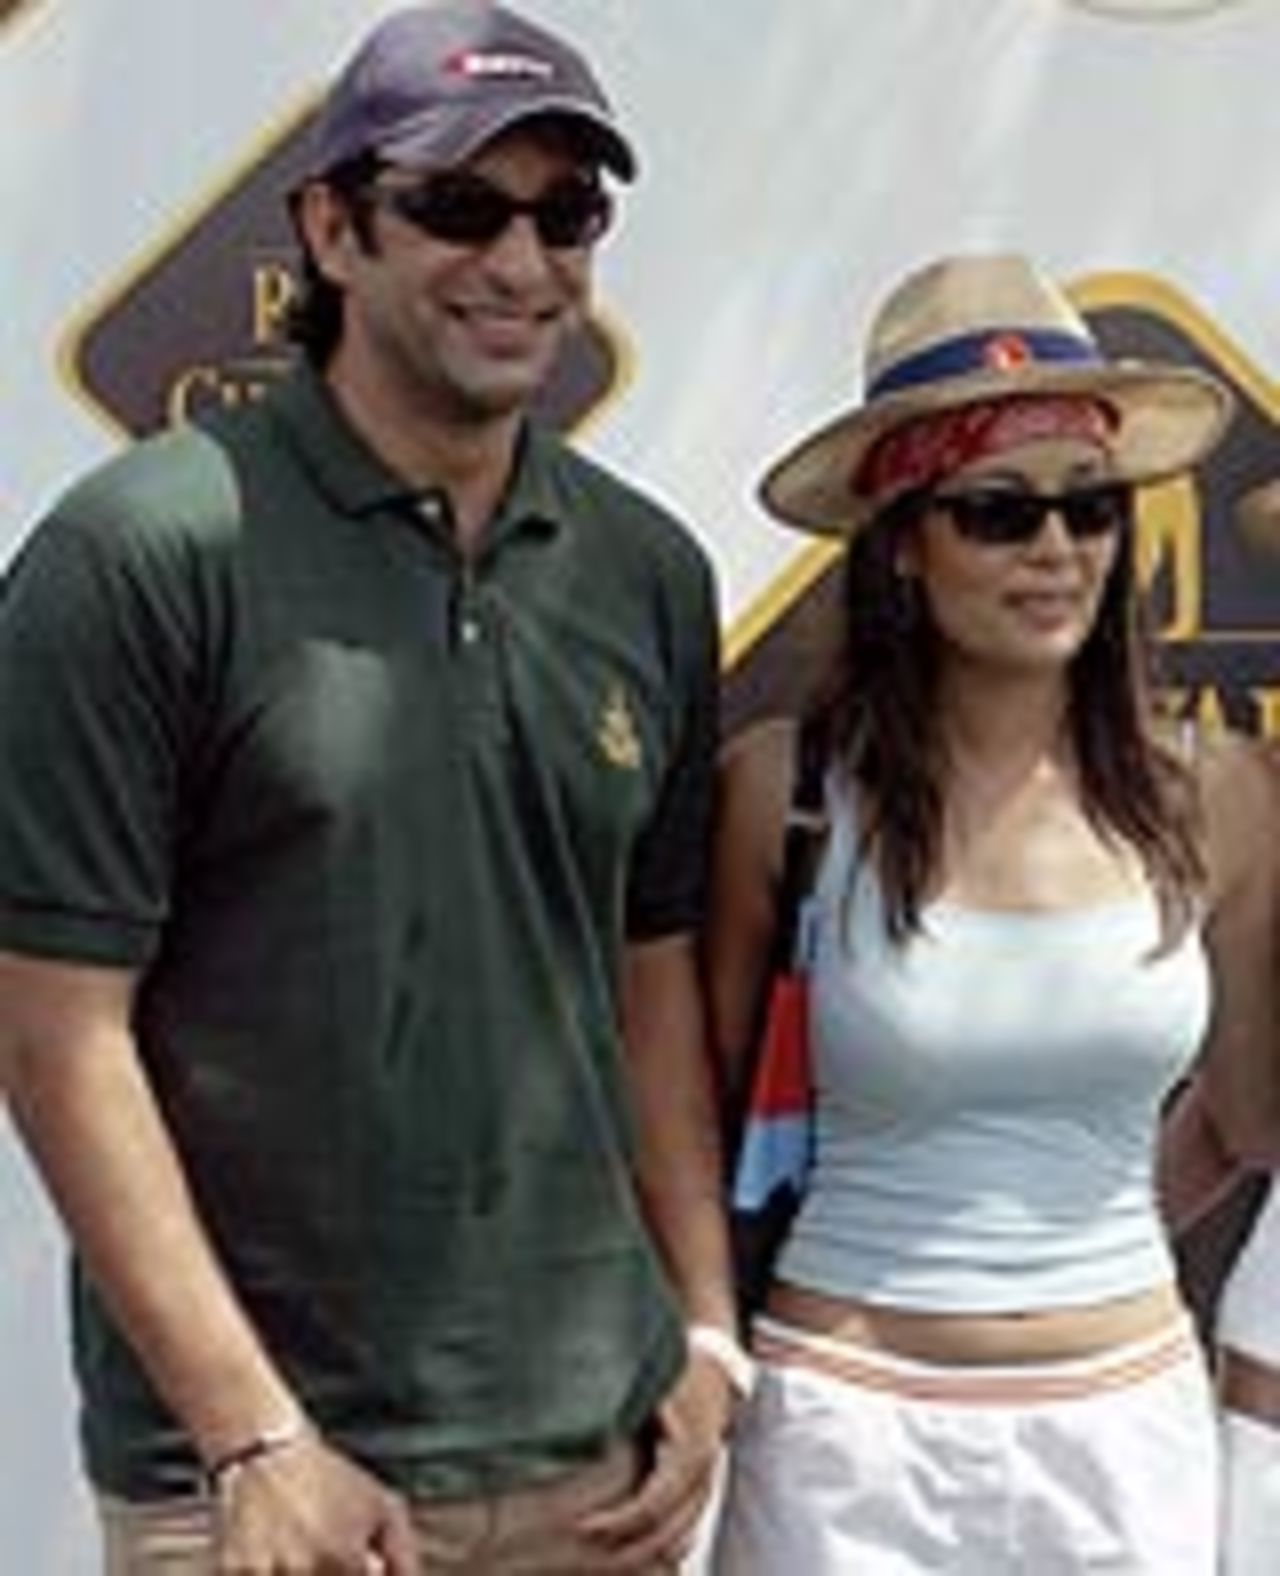 Wasim Akram and Shruti Sharma, an Indian model, at a golf tournament in New Delhi, March 23, 2004